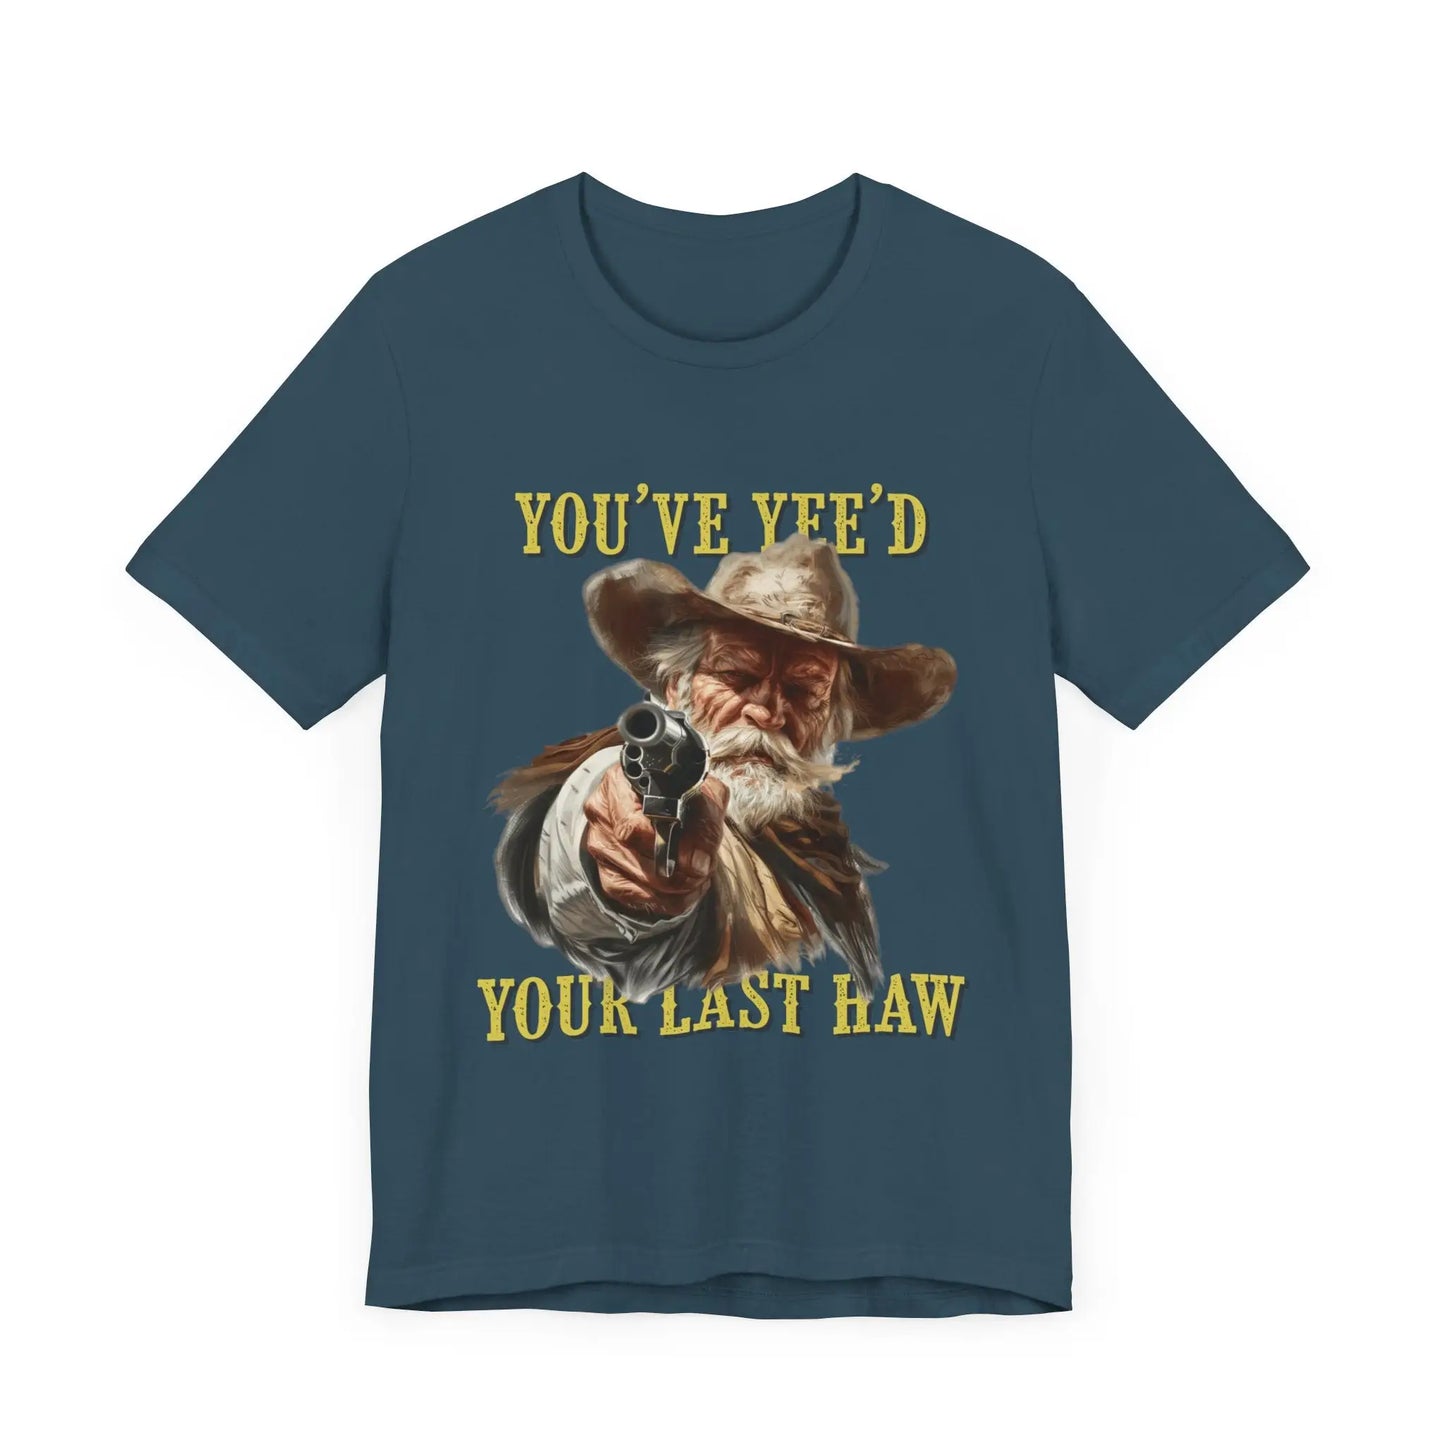 Yee'd Your Last Haw Men's Short Sleeve Tee - Wicked Tees